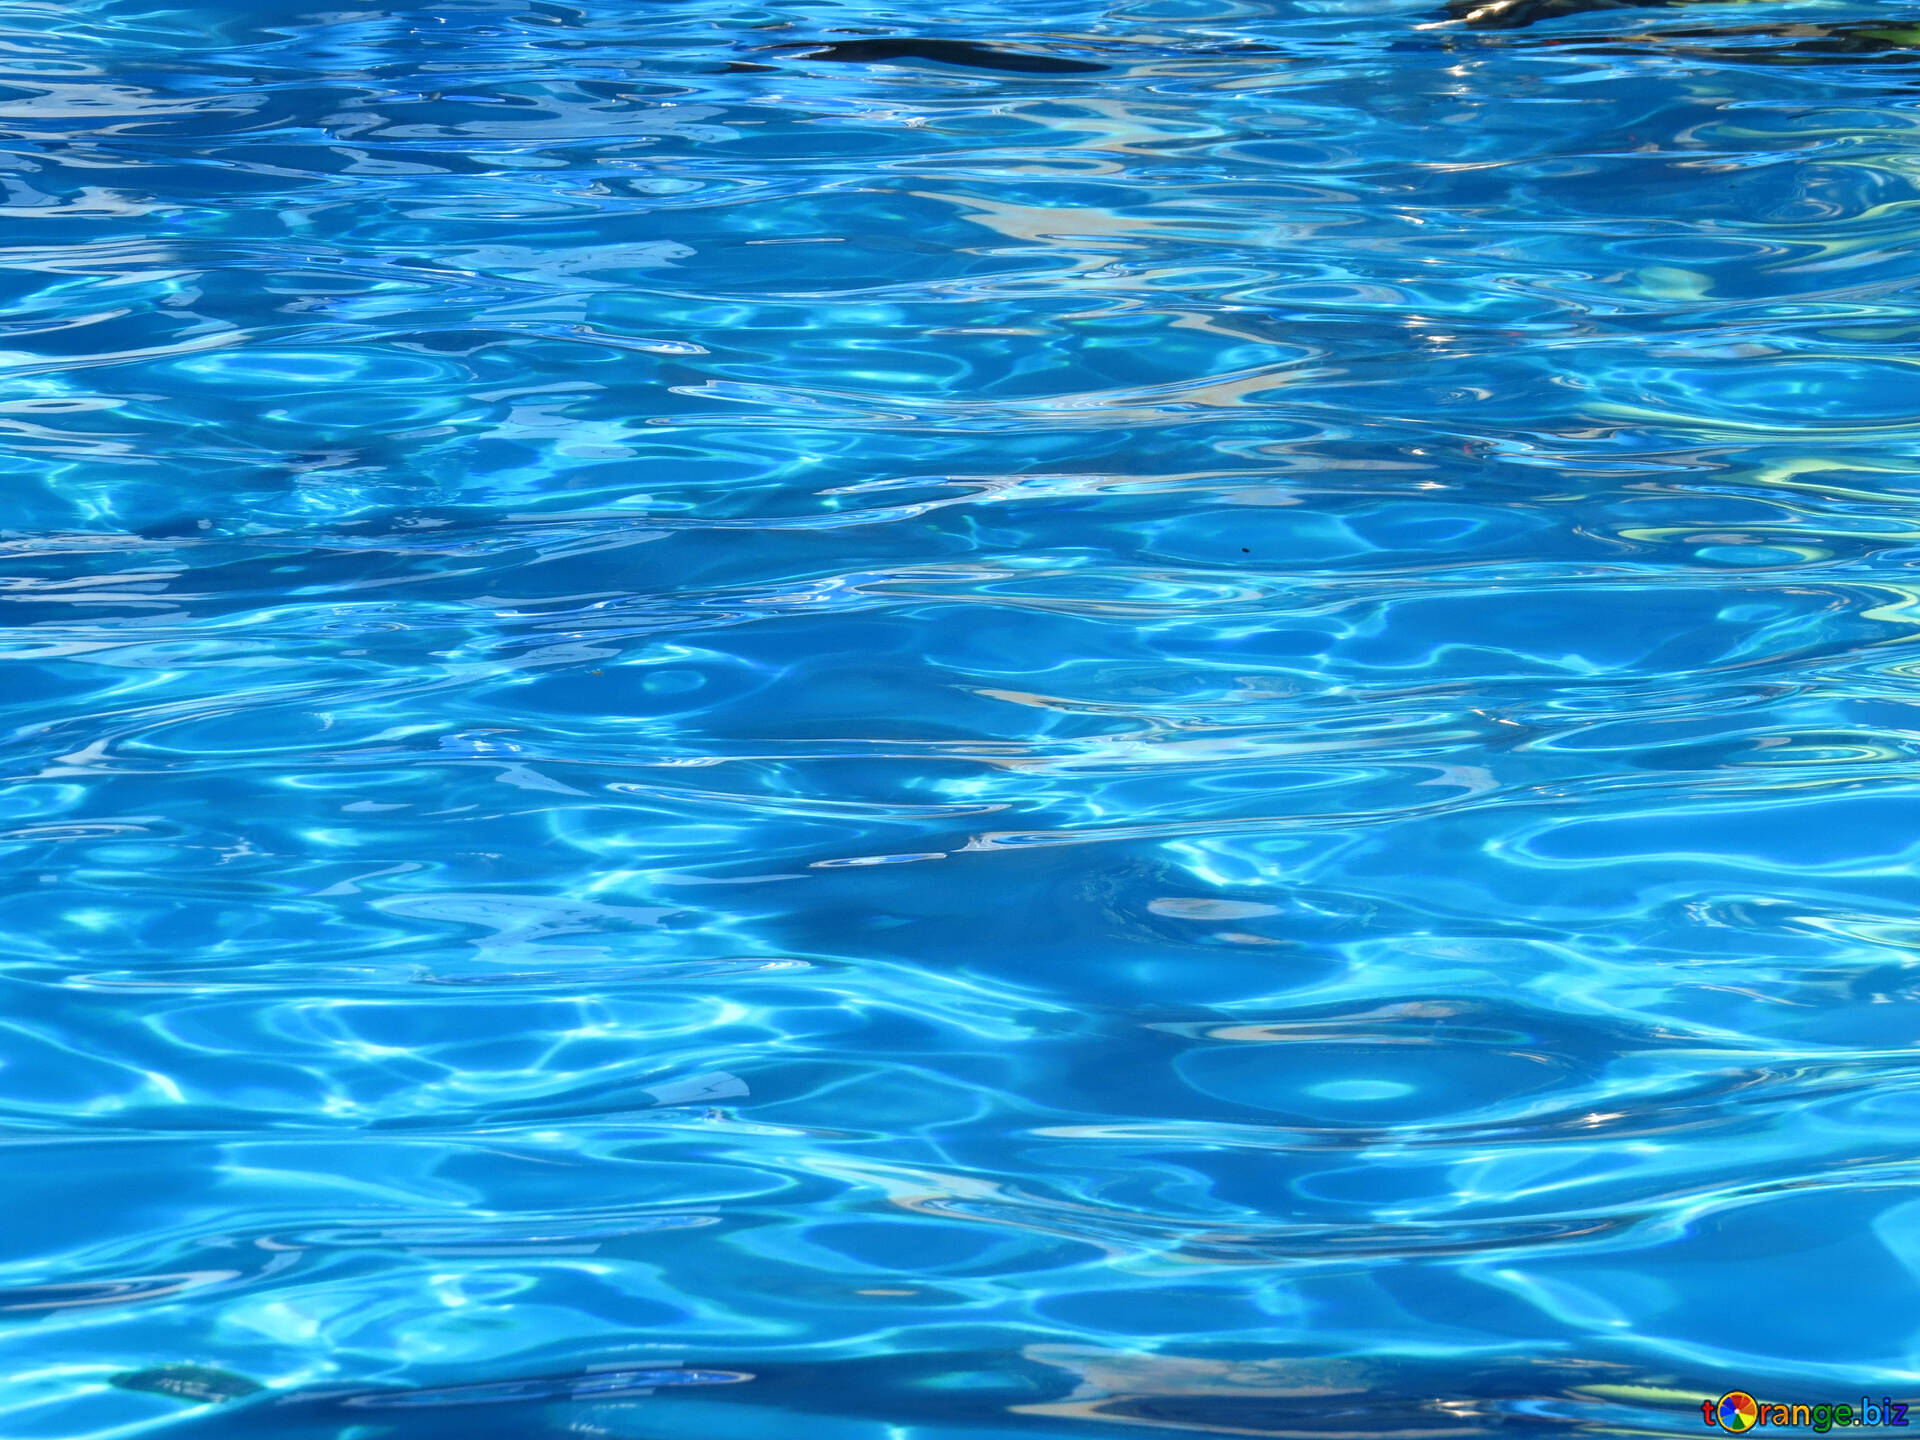 Voda. Вода. Текстура воды. Вода фон. Голубая вода.